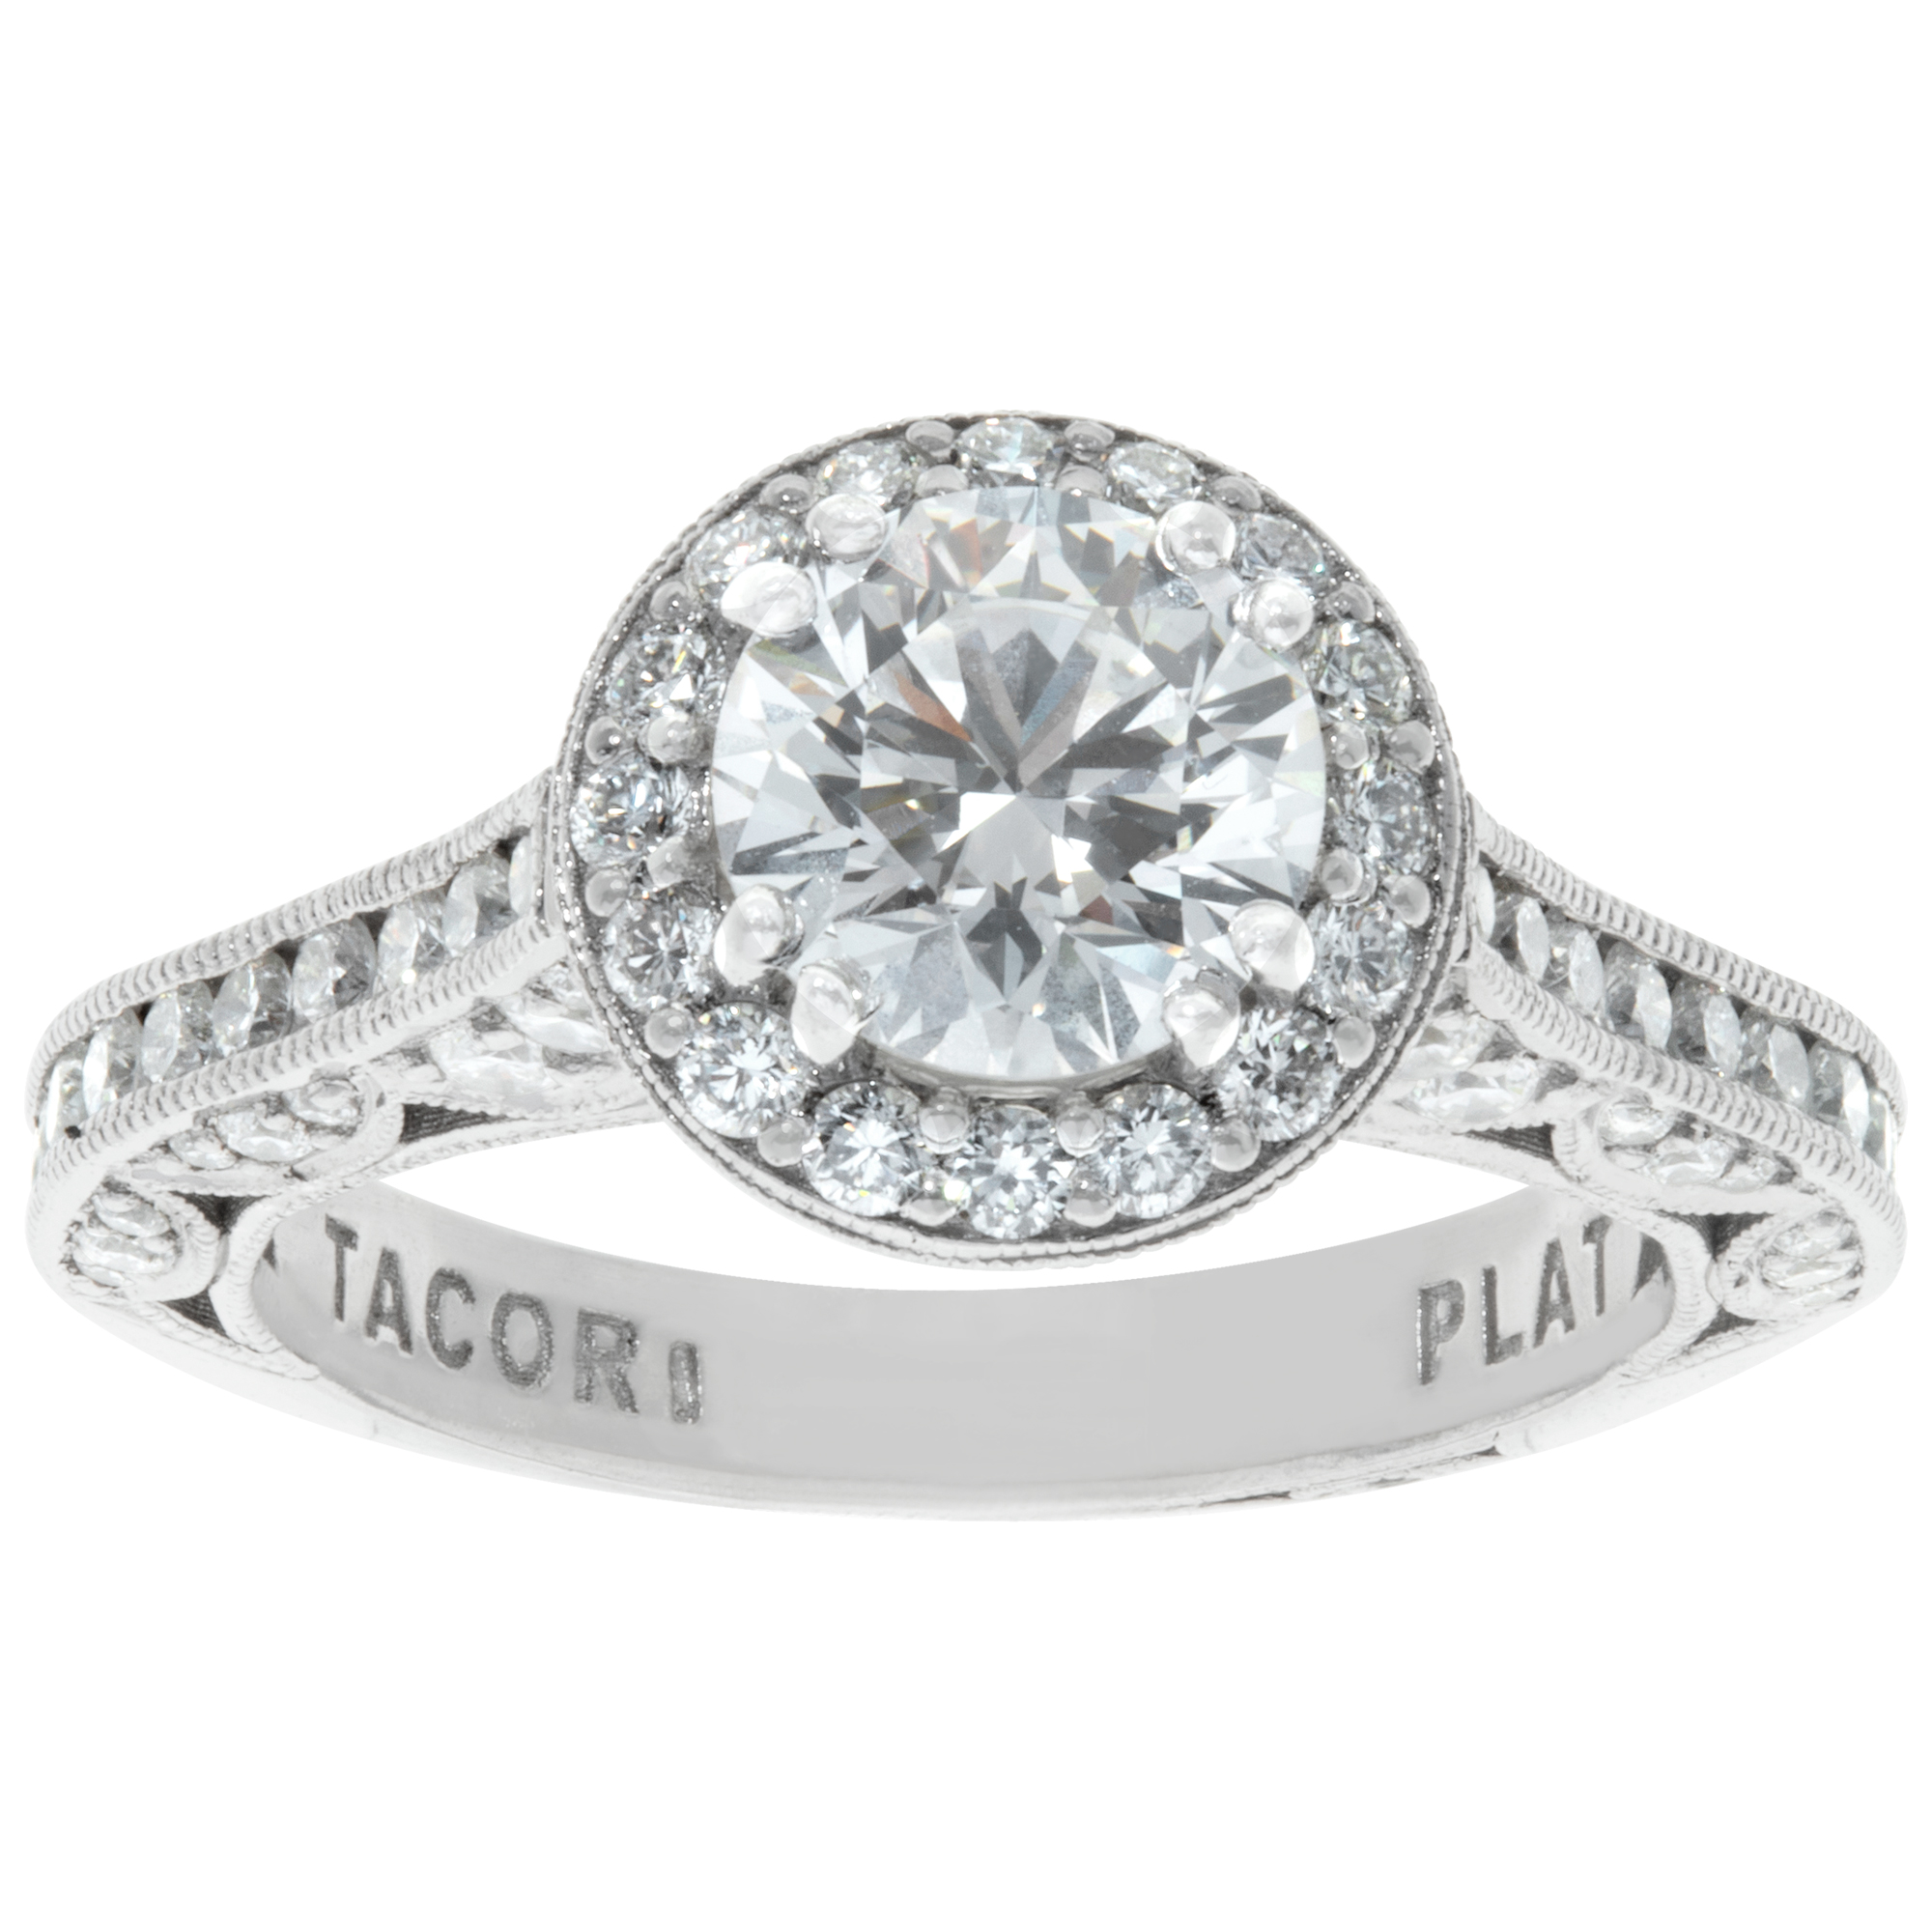 GIA certified round brilliant cut diamond 1.02 carat (G color,  Internally Flawless clarity) ring set in Tacori platinum setting